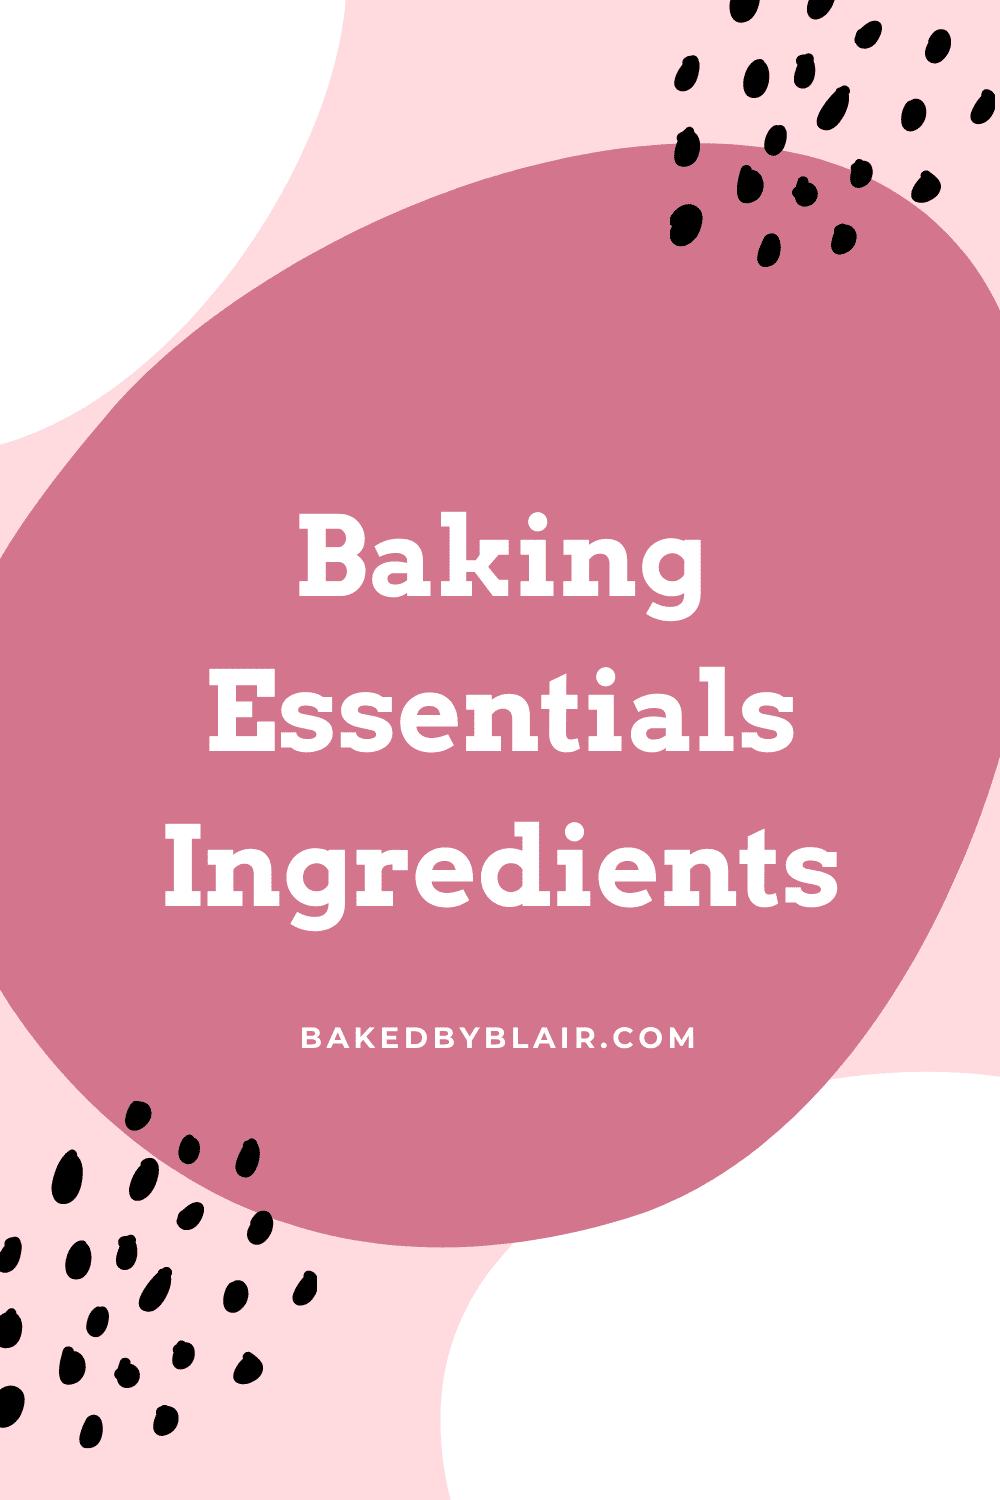 https://bakedbyblair.com/wp-content/uploads/2020/10/Baking-Essentials-Ingredients.png